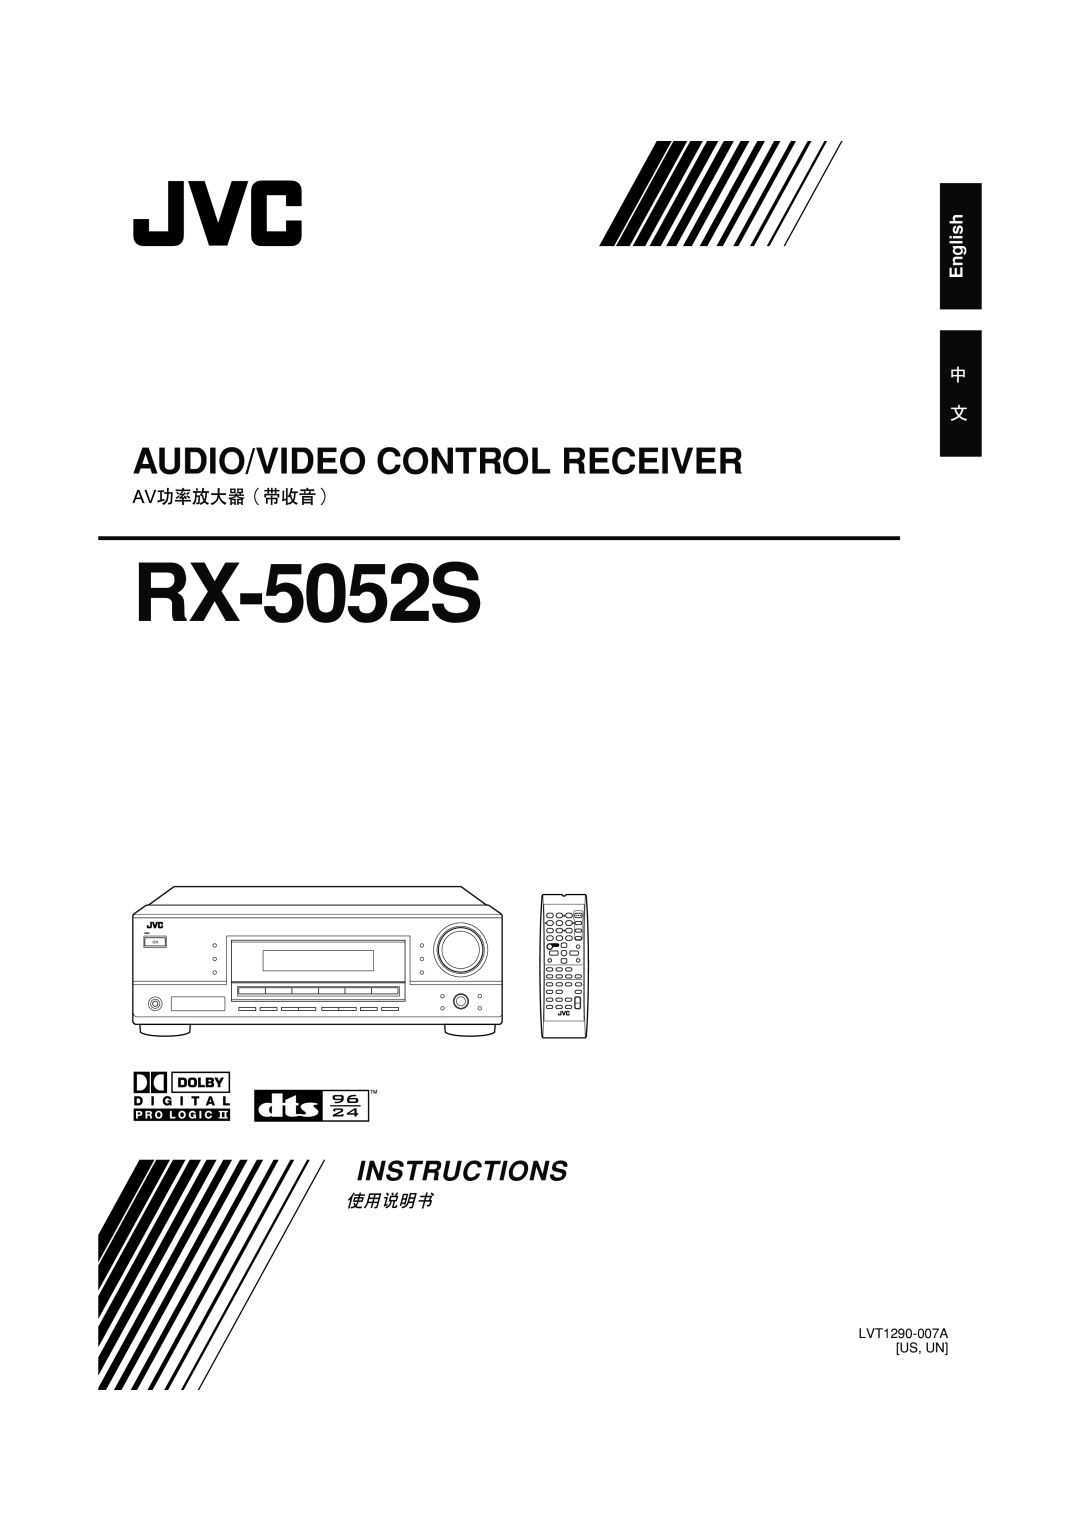 JVC LVT1290-007A manual English, RX-5052S, Audio/Video Control Receiver, Instructions, Ta/News/Info Display Mode 